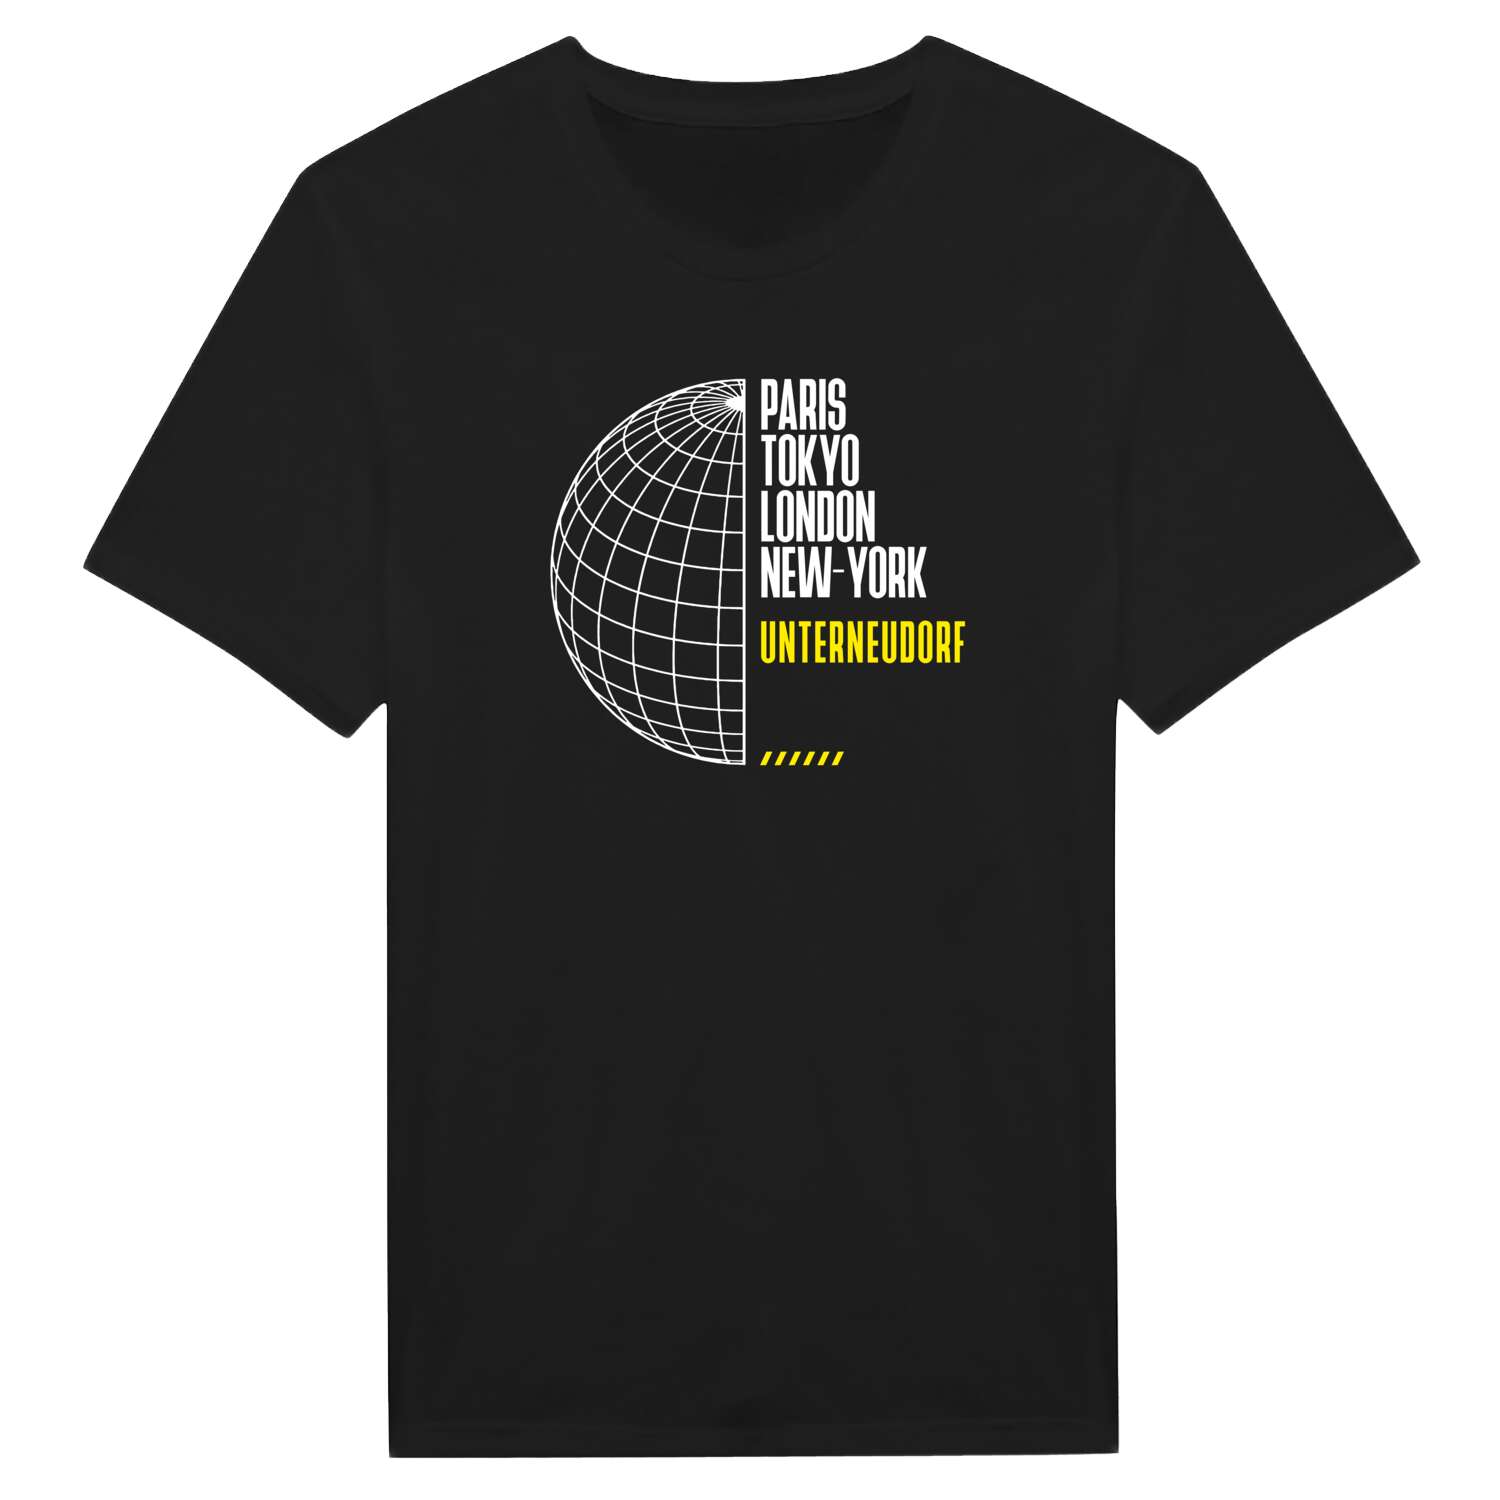 Unterneudorf T-Shirt »Paris Tokyo London«